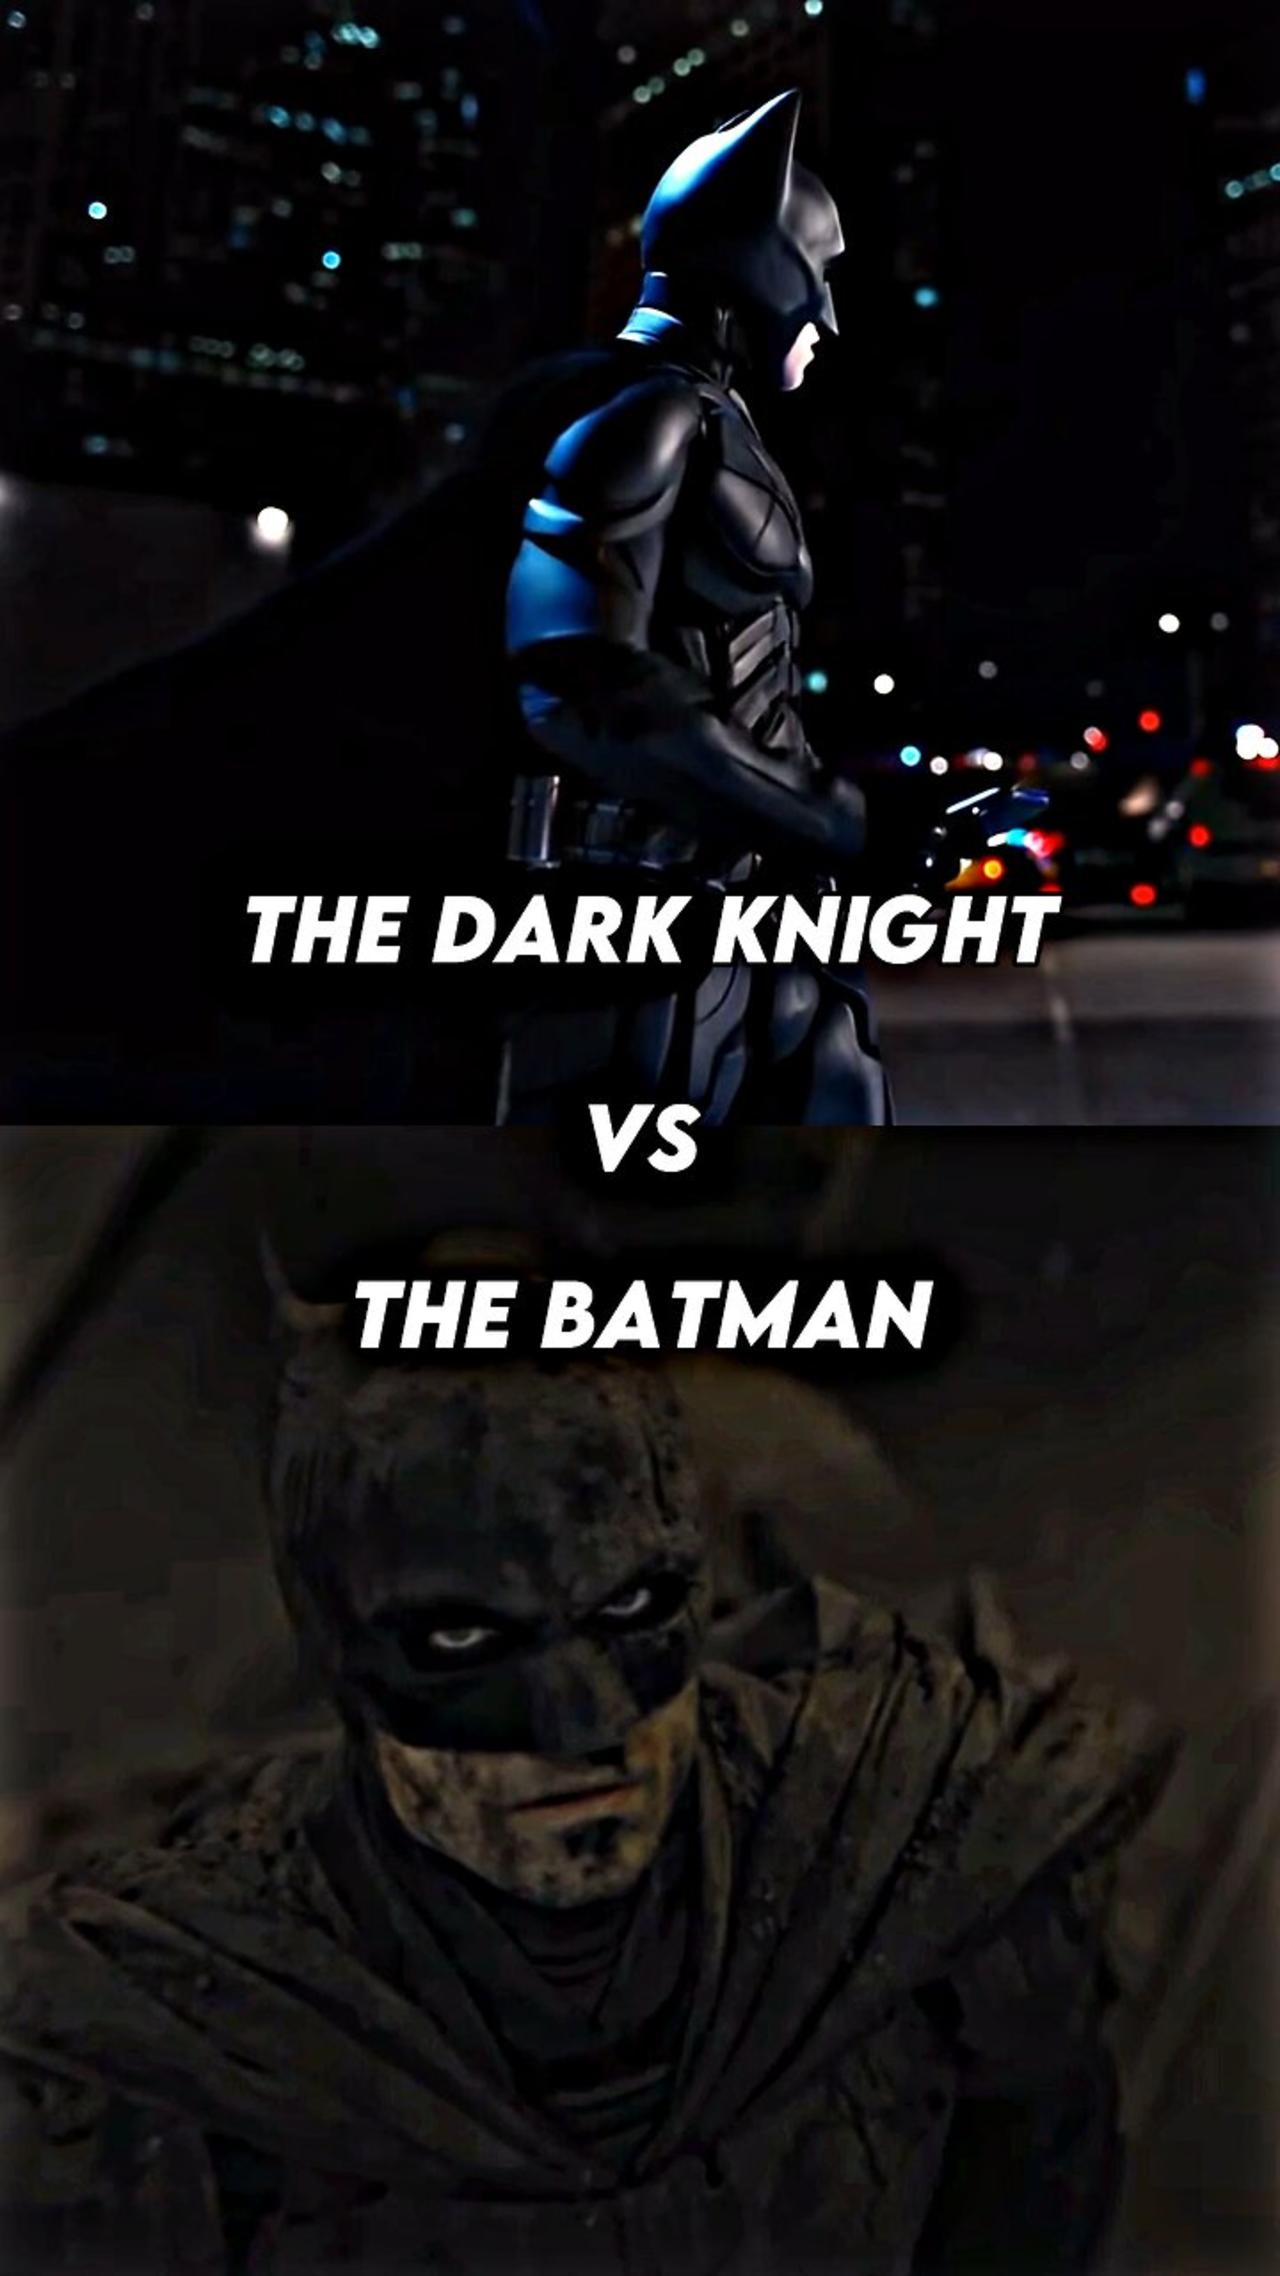 The Dark Knight vs The Batman